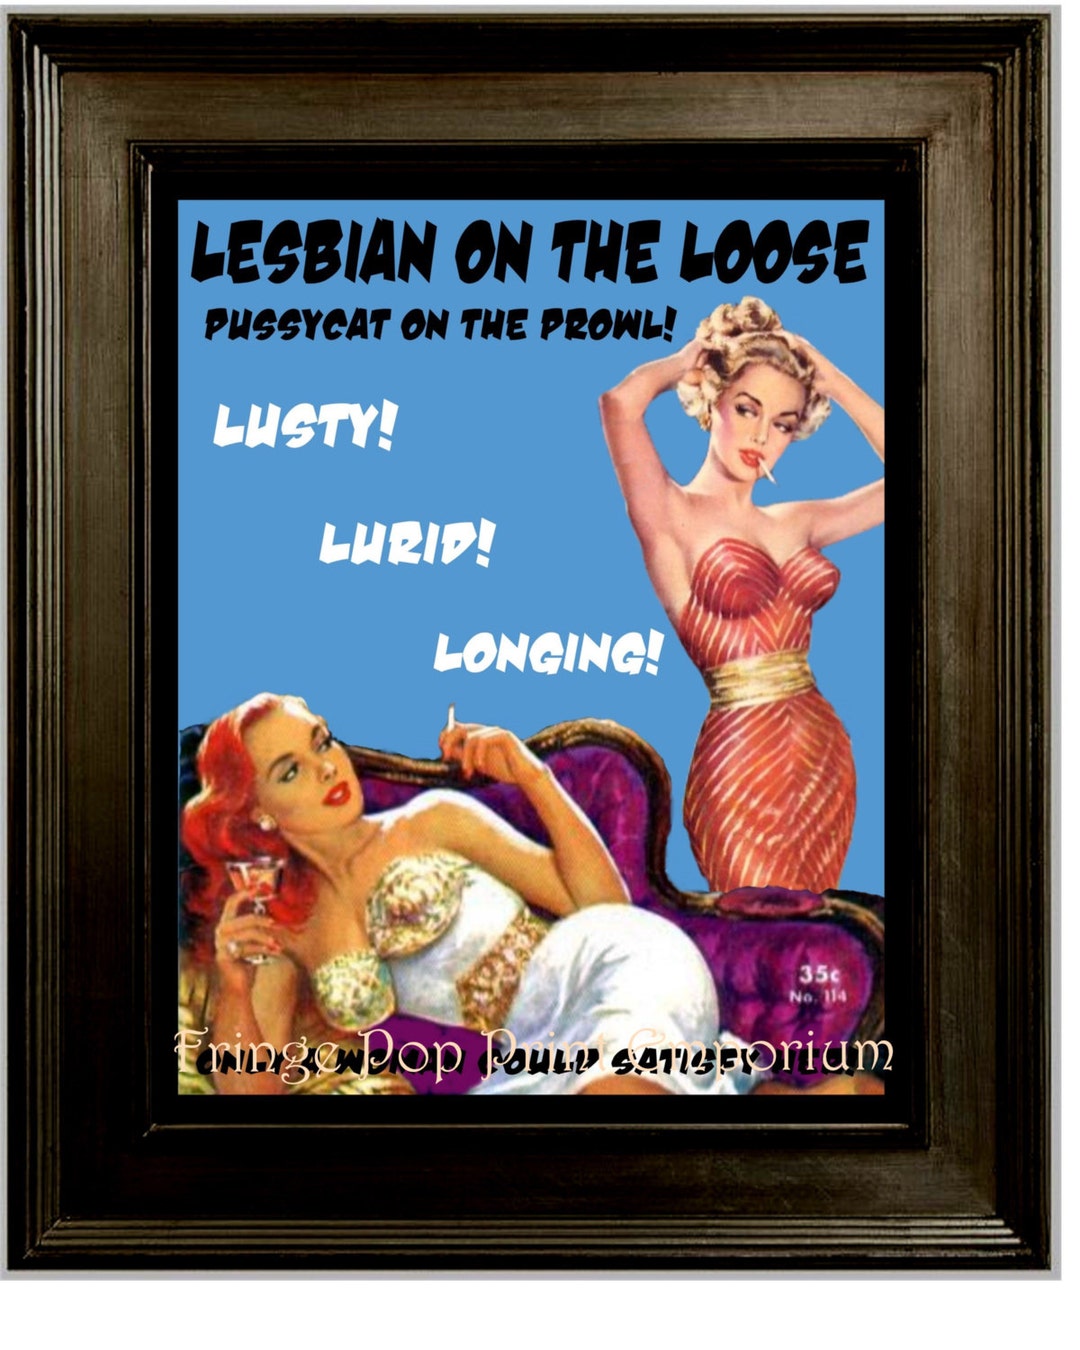 Lesbian Pulp Art Print 8 X 10 Lesbian on the Loose pic